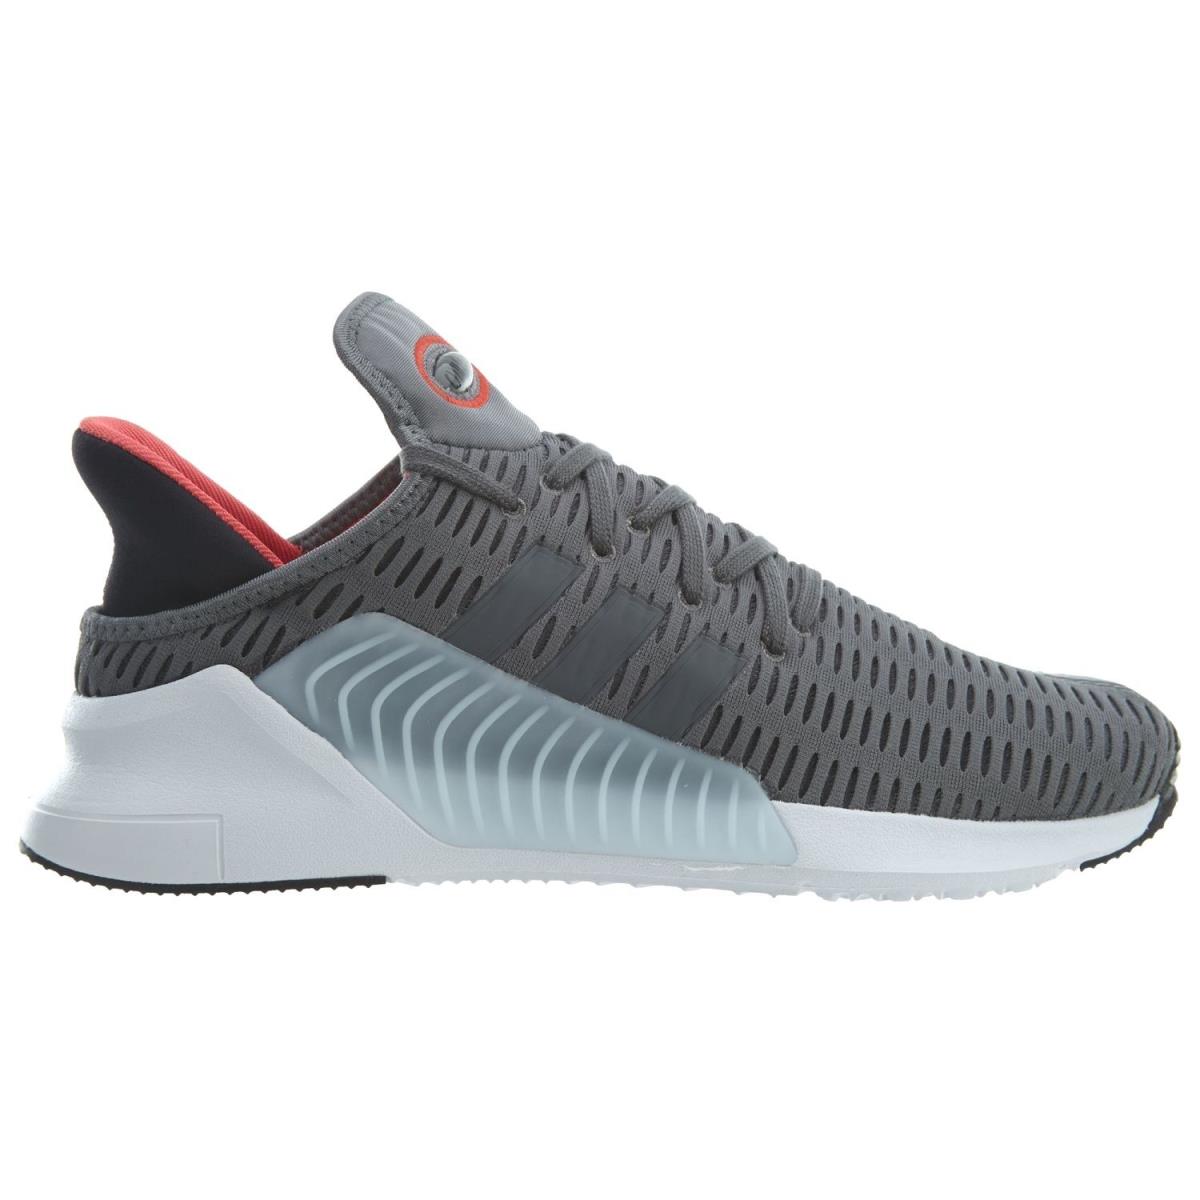 Adidas Climacool 02/17 Grey Grey White Running Sneaker CG3346 463 Men`s Shoes